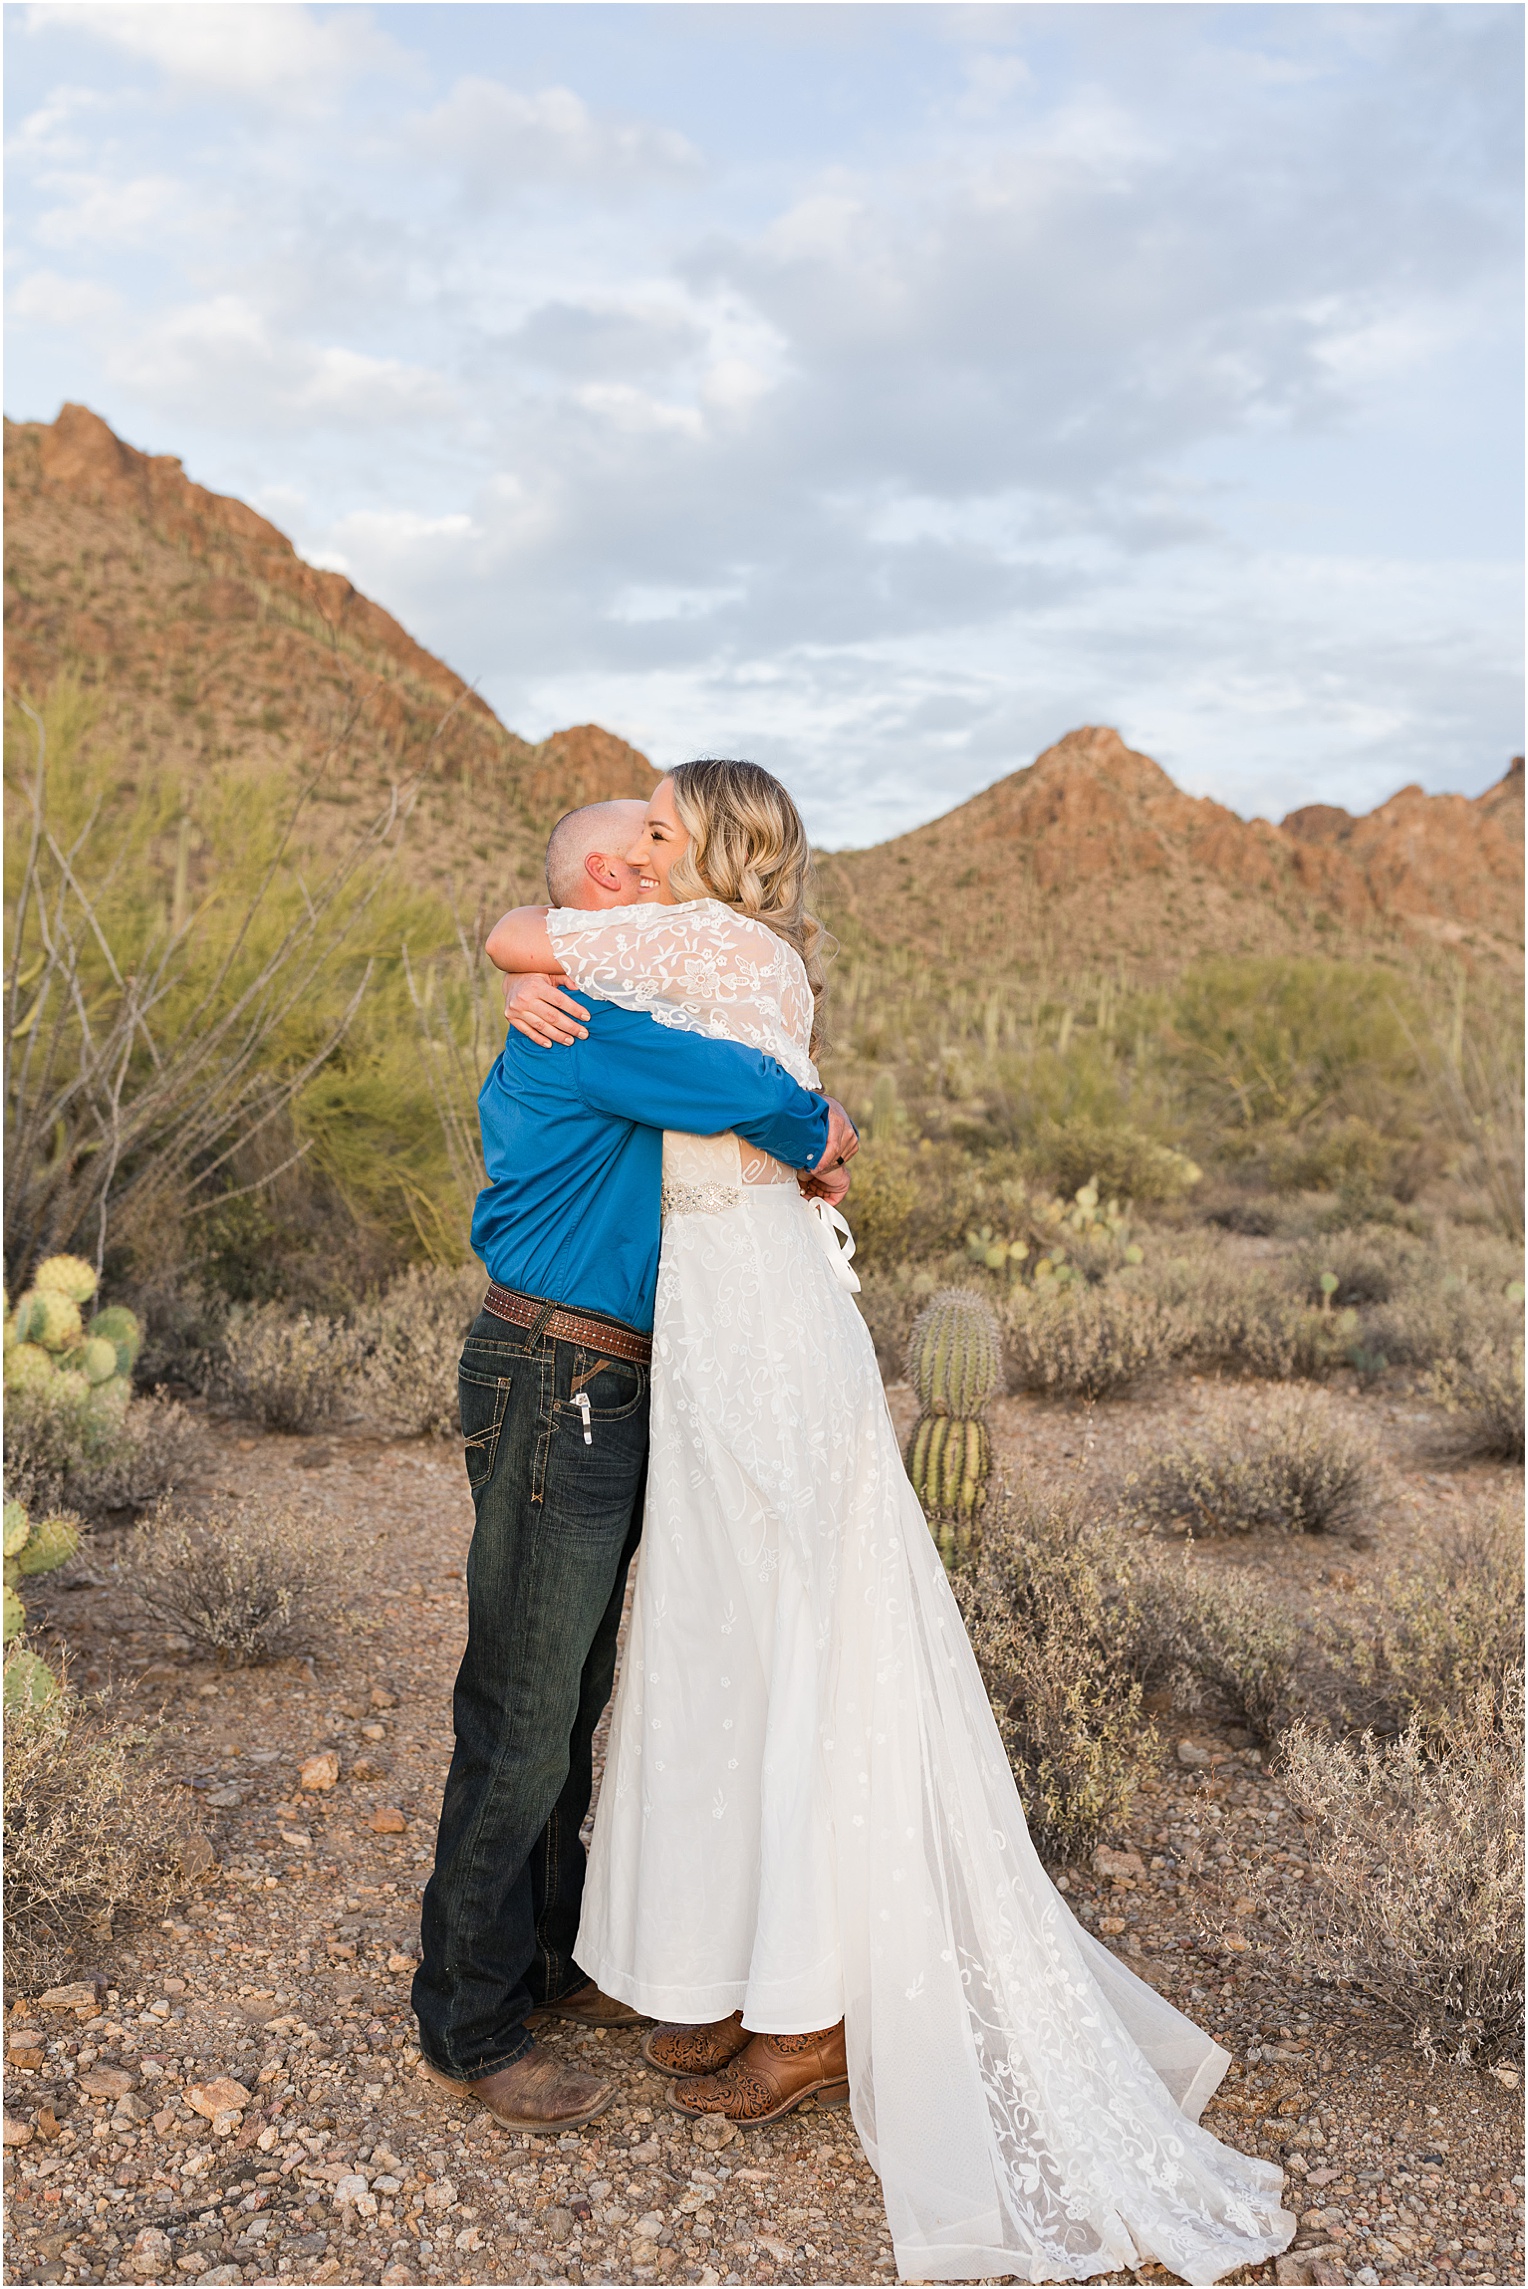 Gates Pass Wedding Tucson Arizona Andrea + Cameron romantic bride and groom portraits